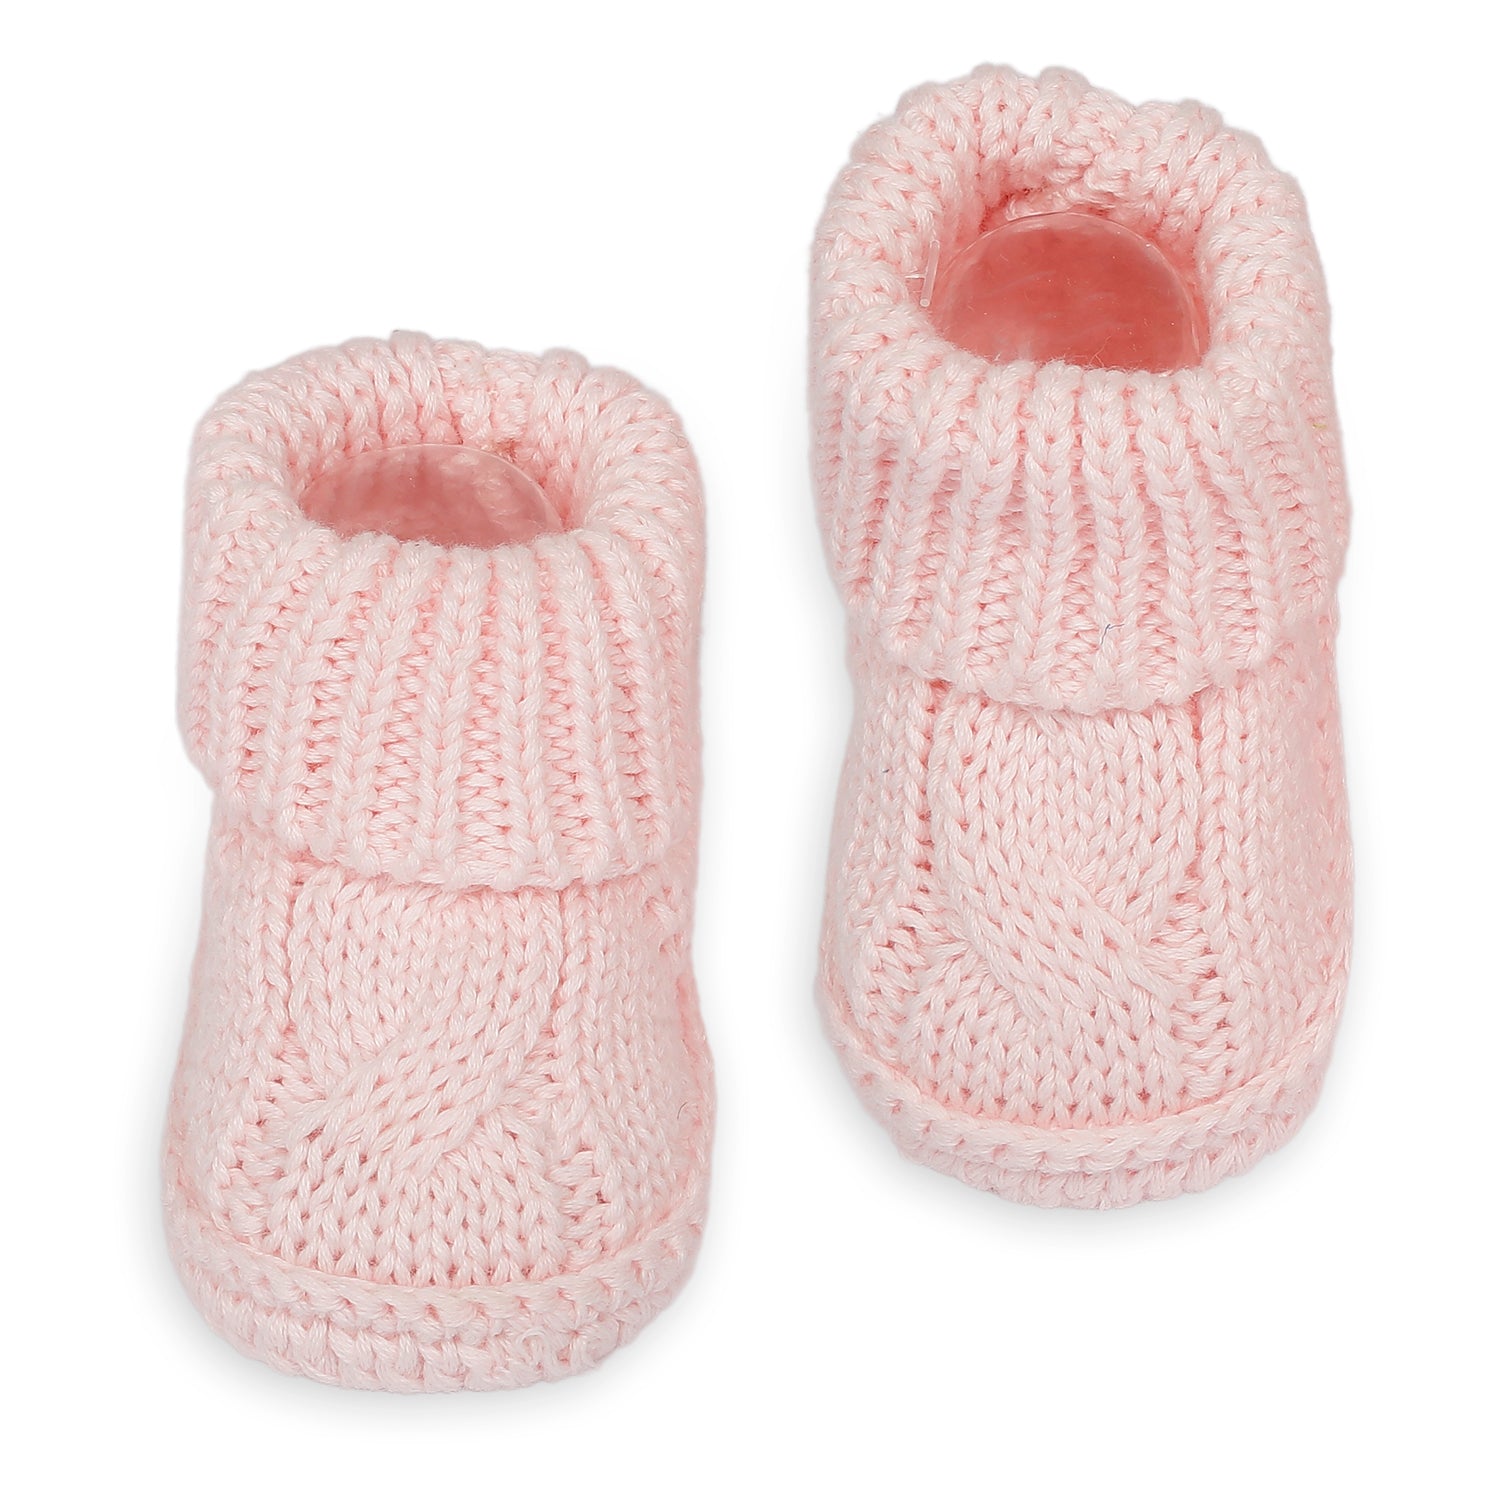 Knitted Newborn Crochet Socks Booties - Peach